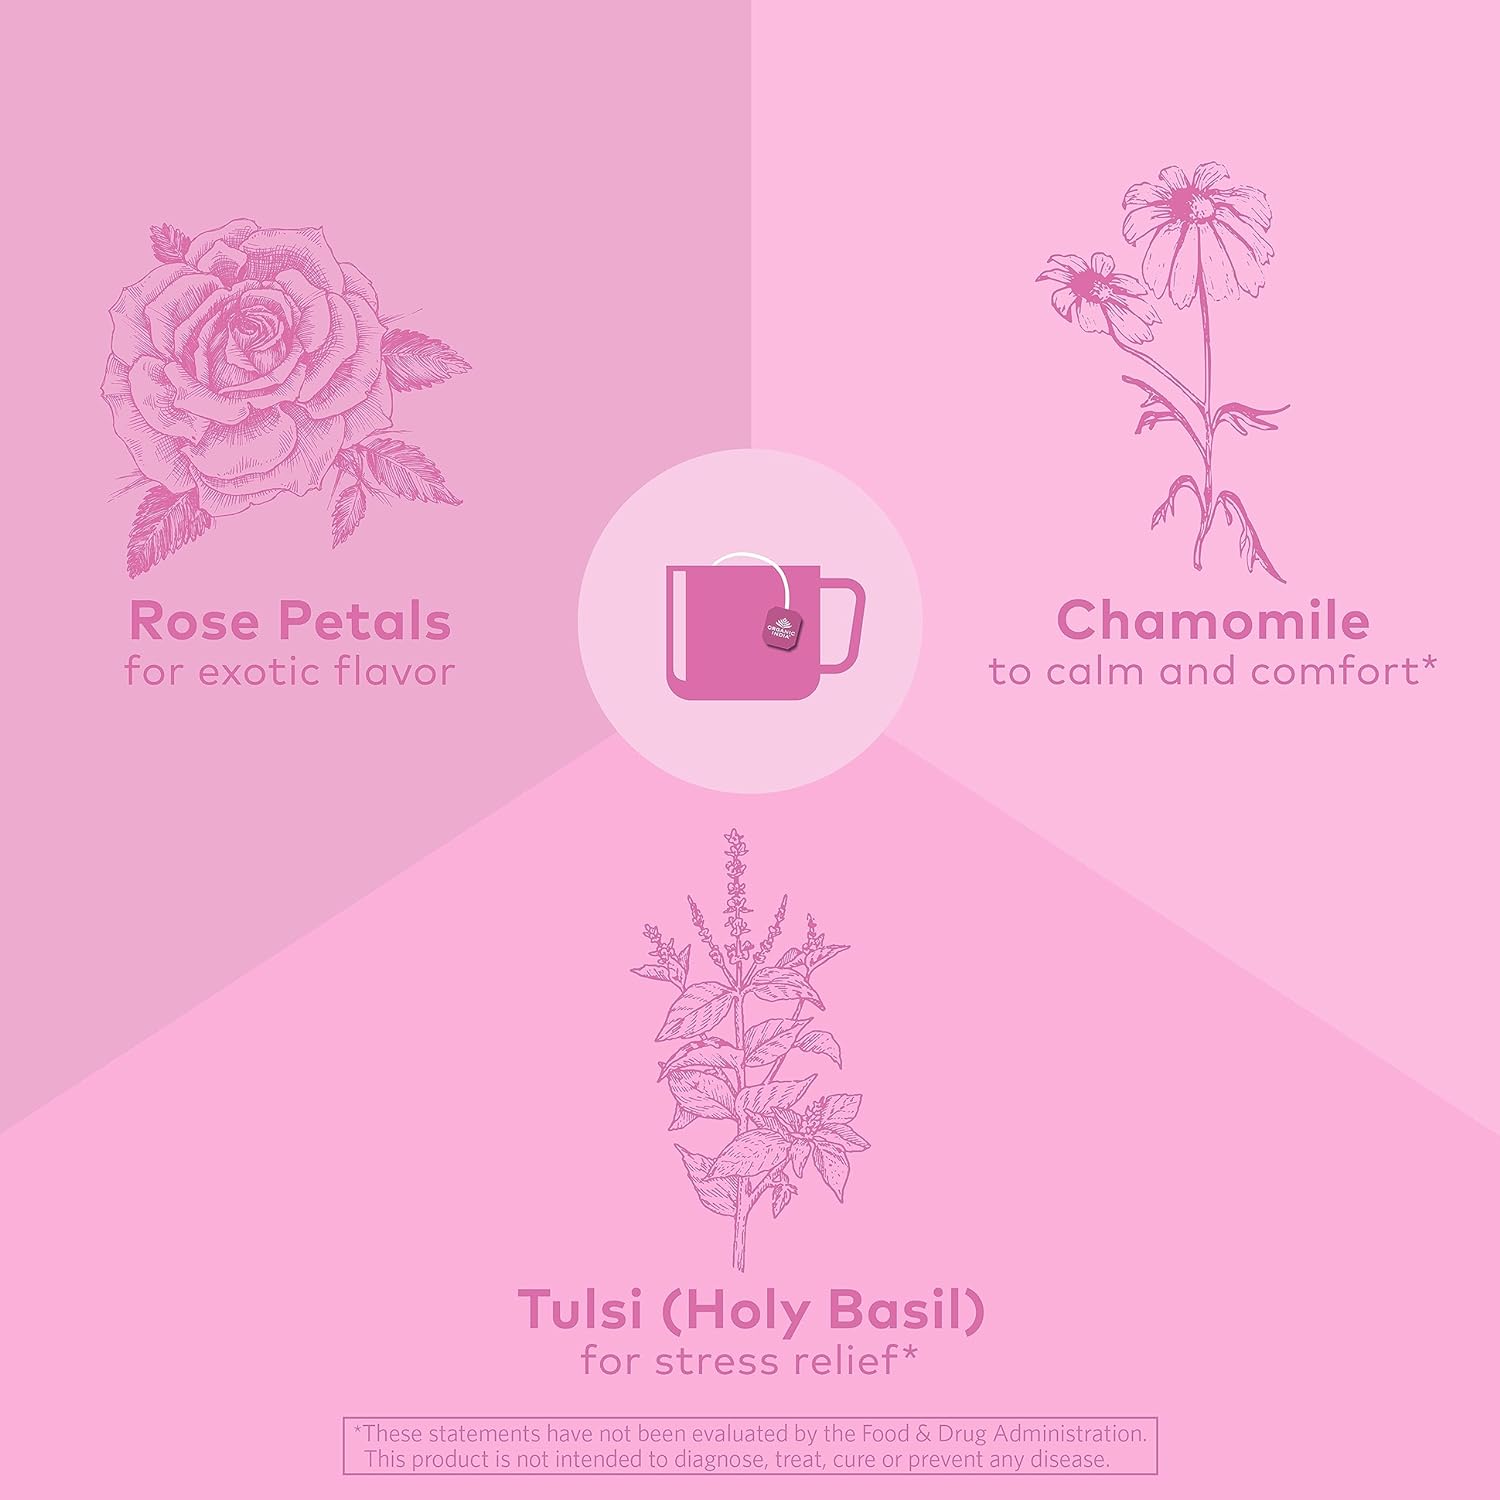 Organic India Tulsi Sweet Rose Herbal Tea: A Magical Elixir of Wellness and Taste